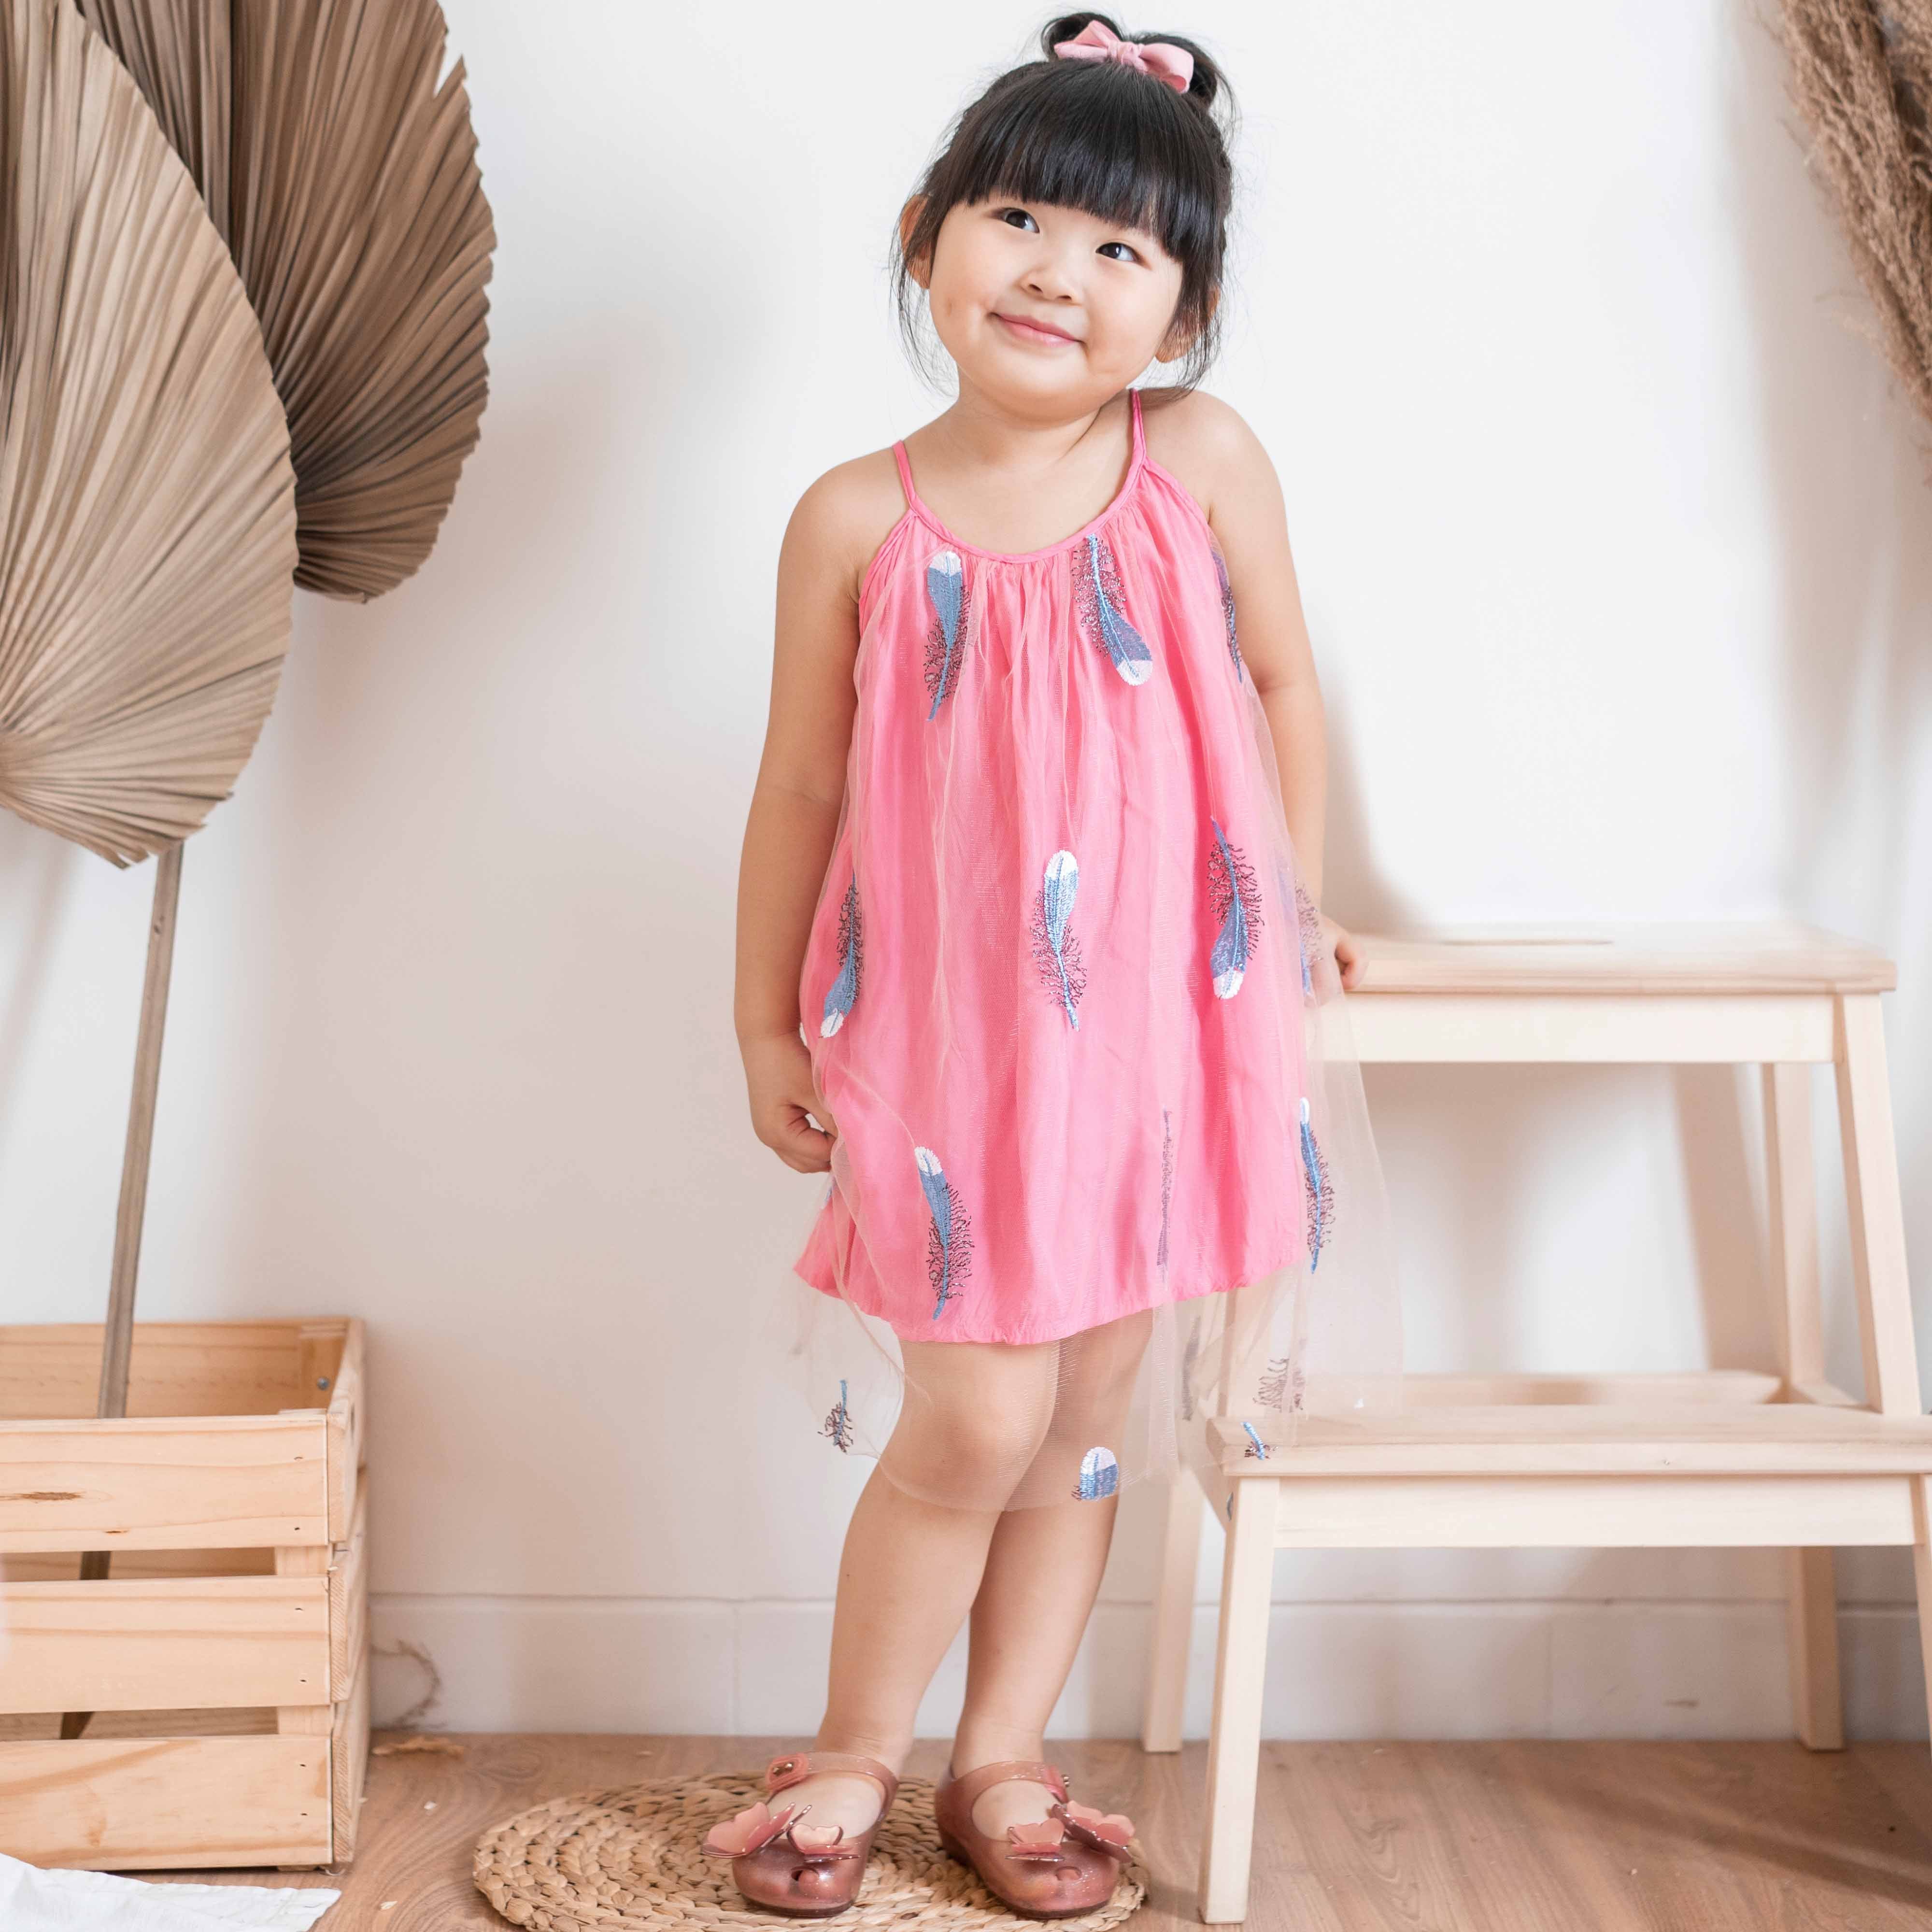 Nice Kids - Sophia Dress (dress pantai, summer dress anak)